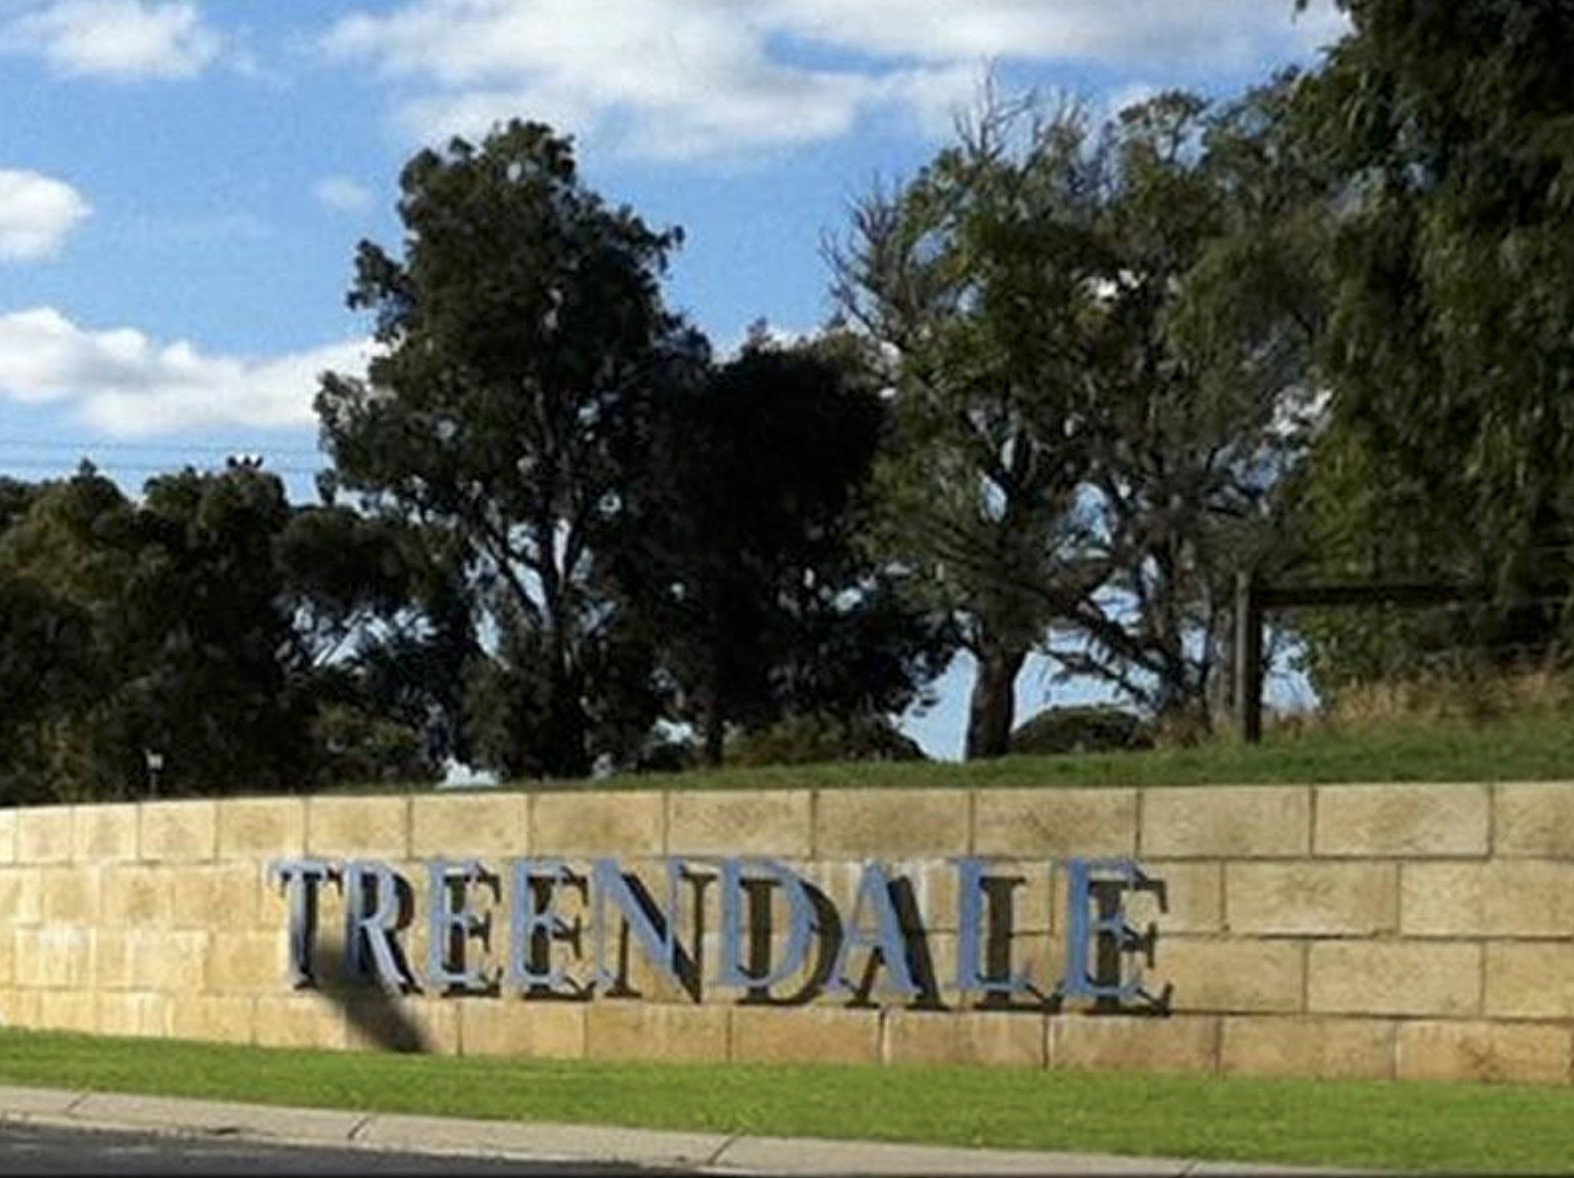 Treendale-2-1